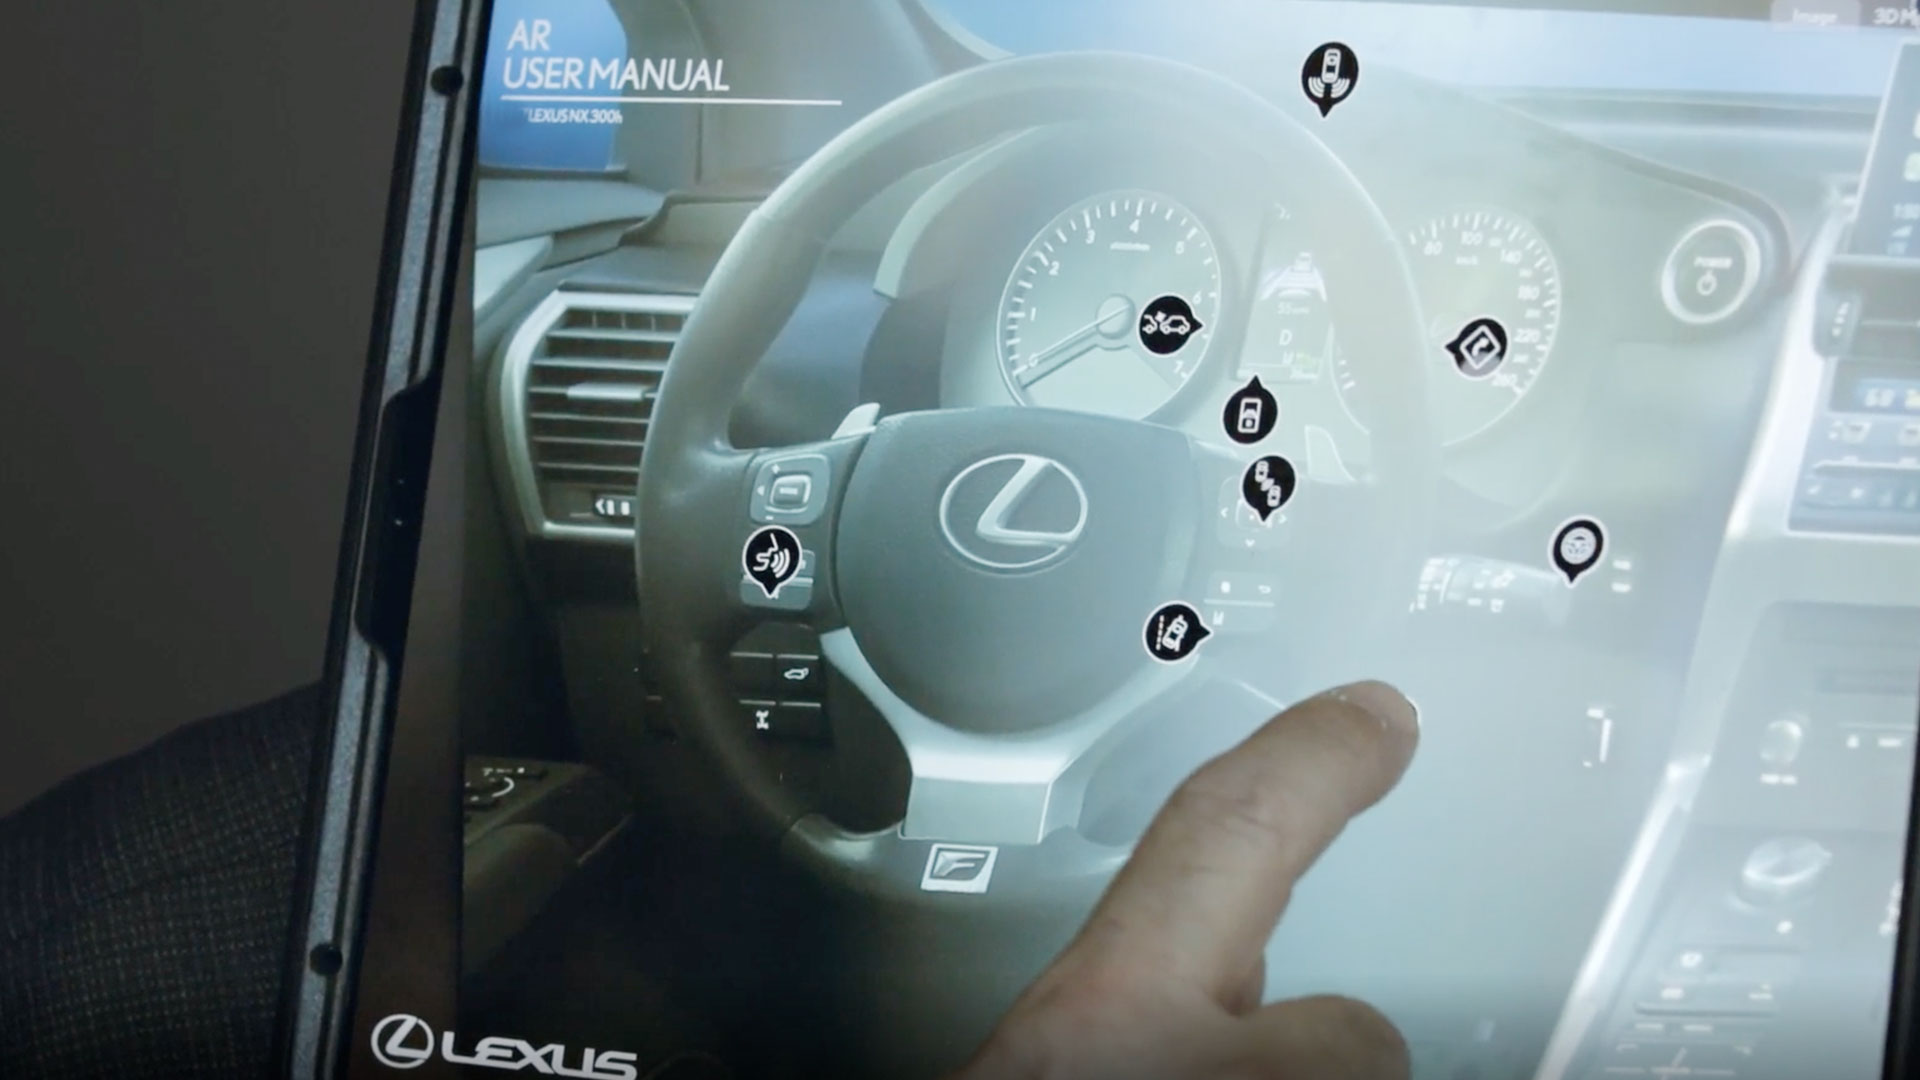 Lexus augmented reality